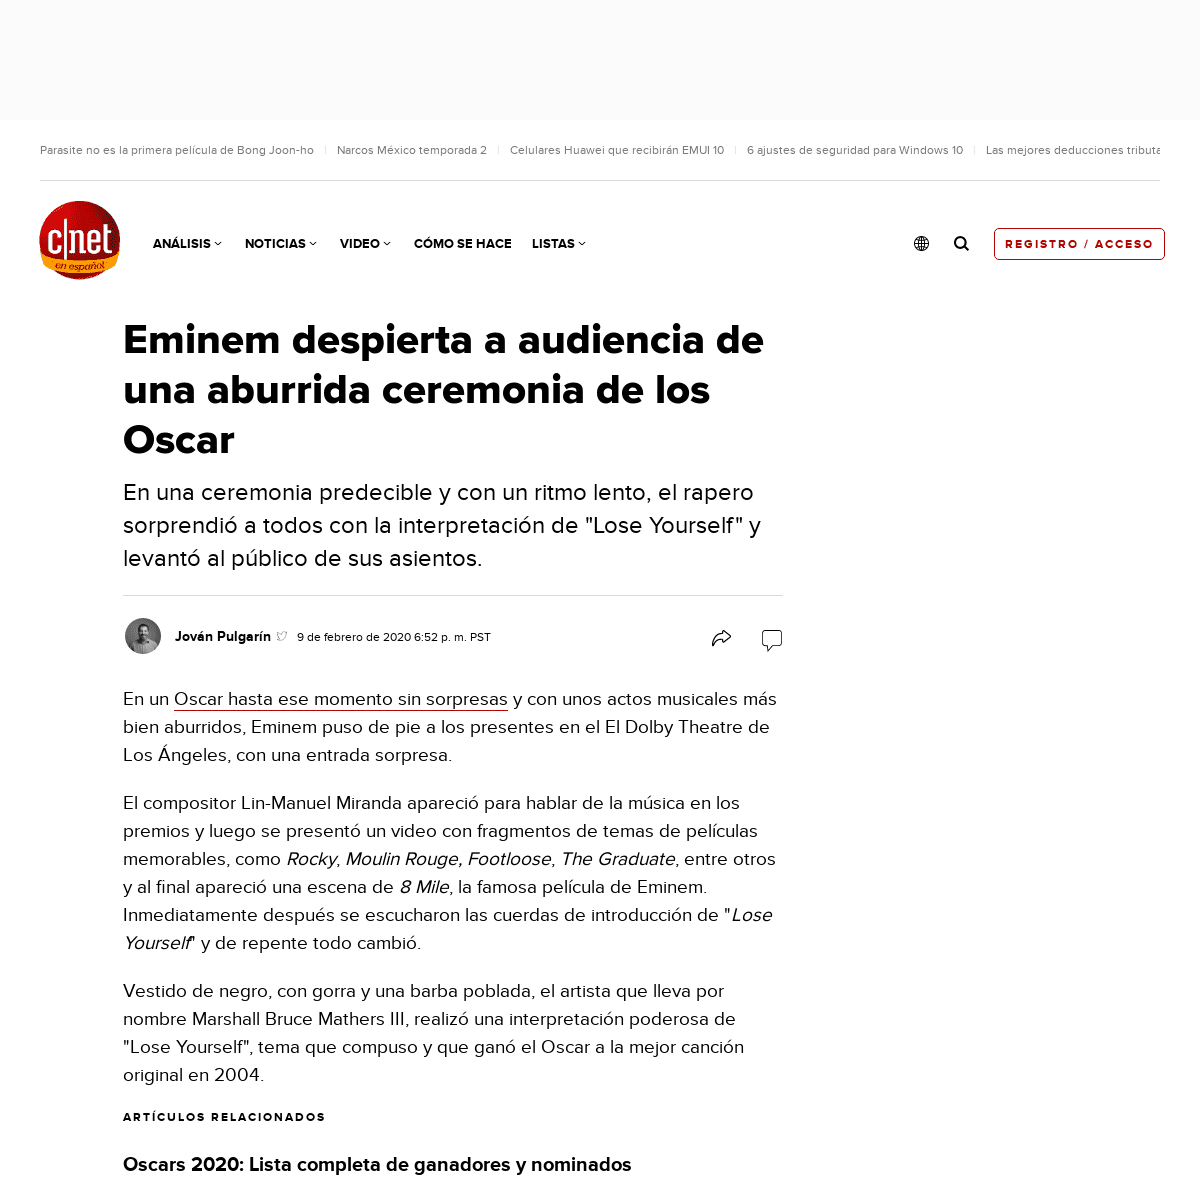 A complete backup of www.cnet.com/es/noticias/oscar-2020-eminem-despierta-audiencia-lose-yourself/